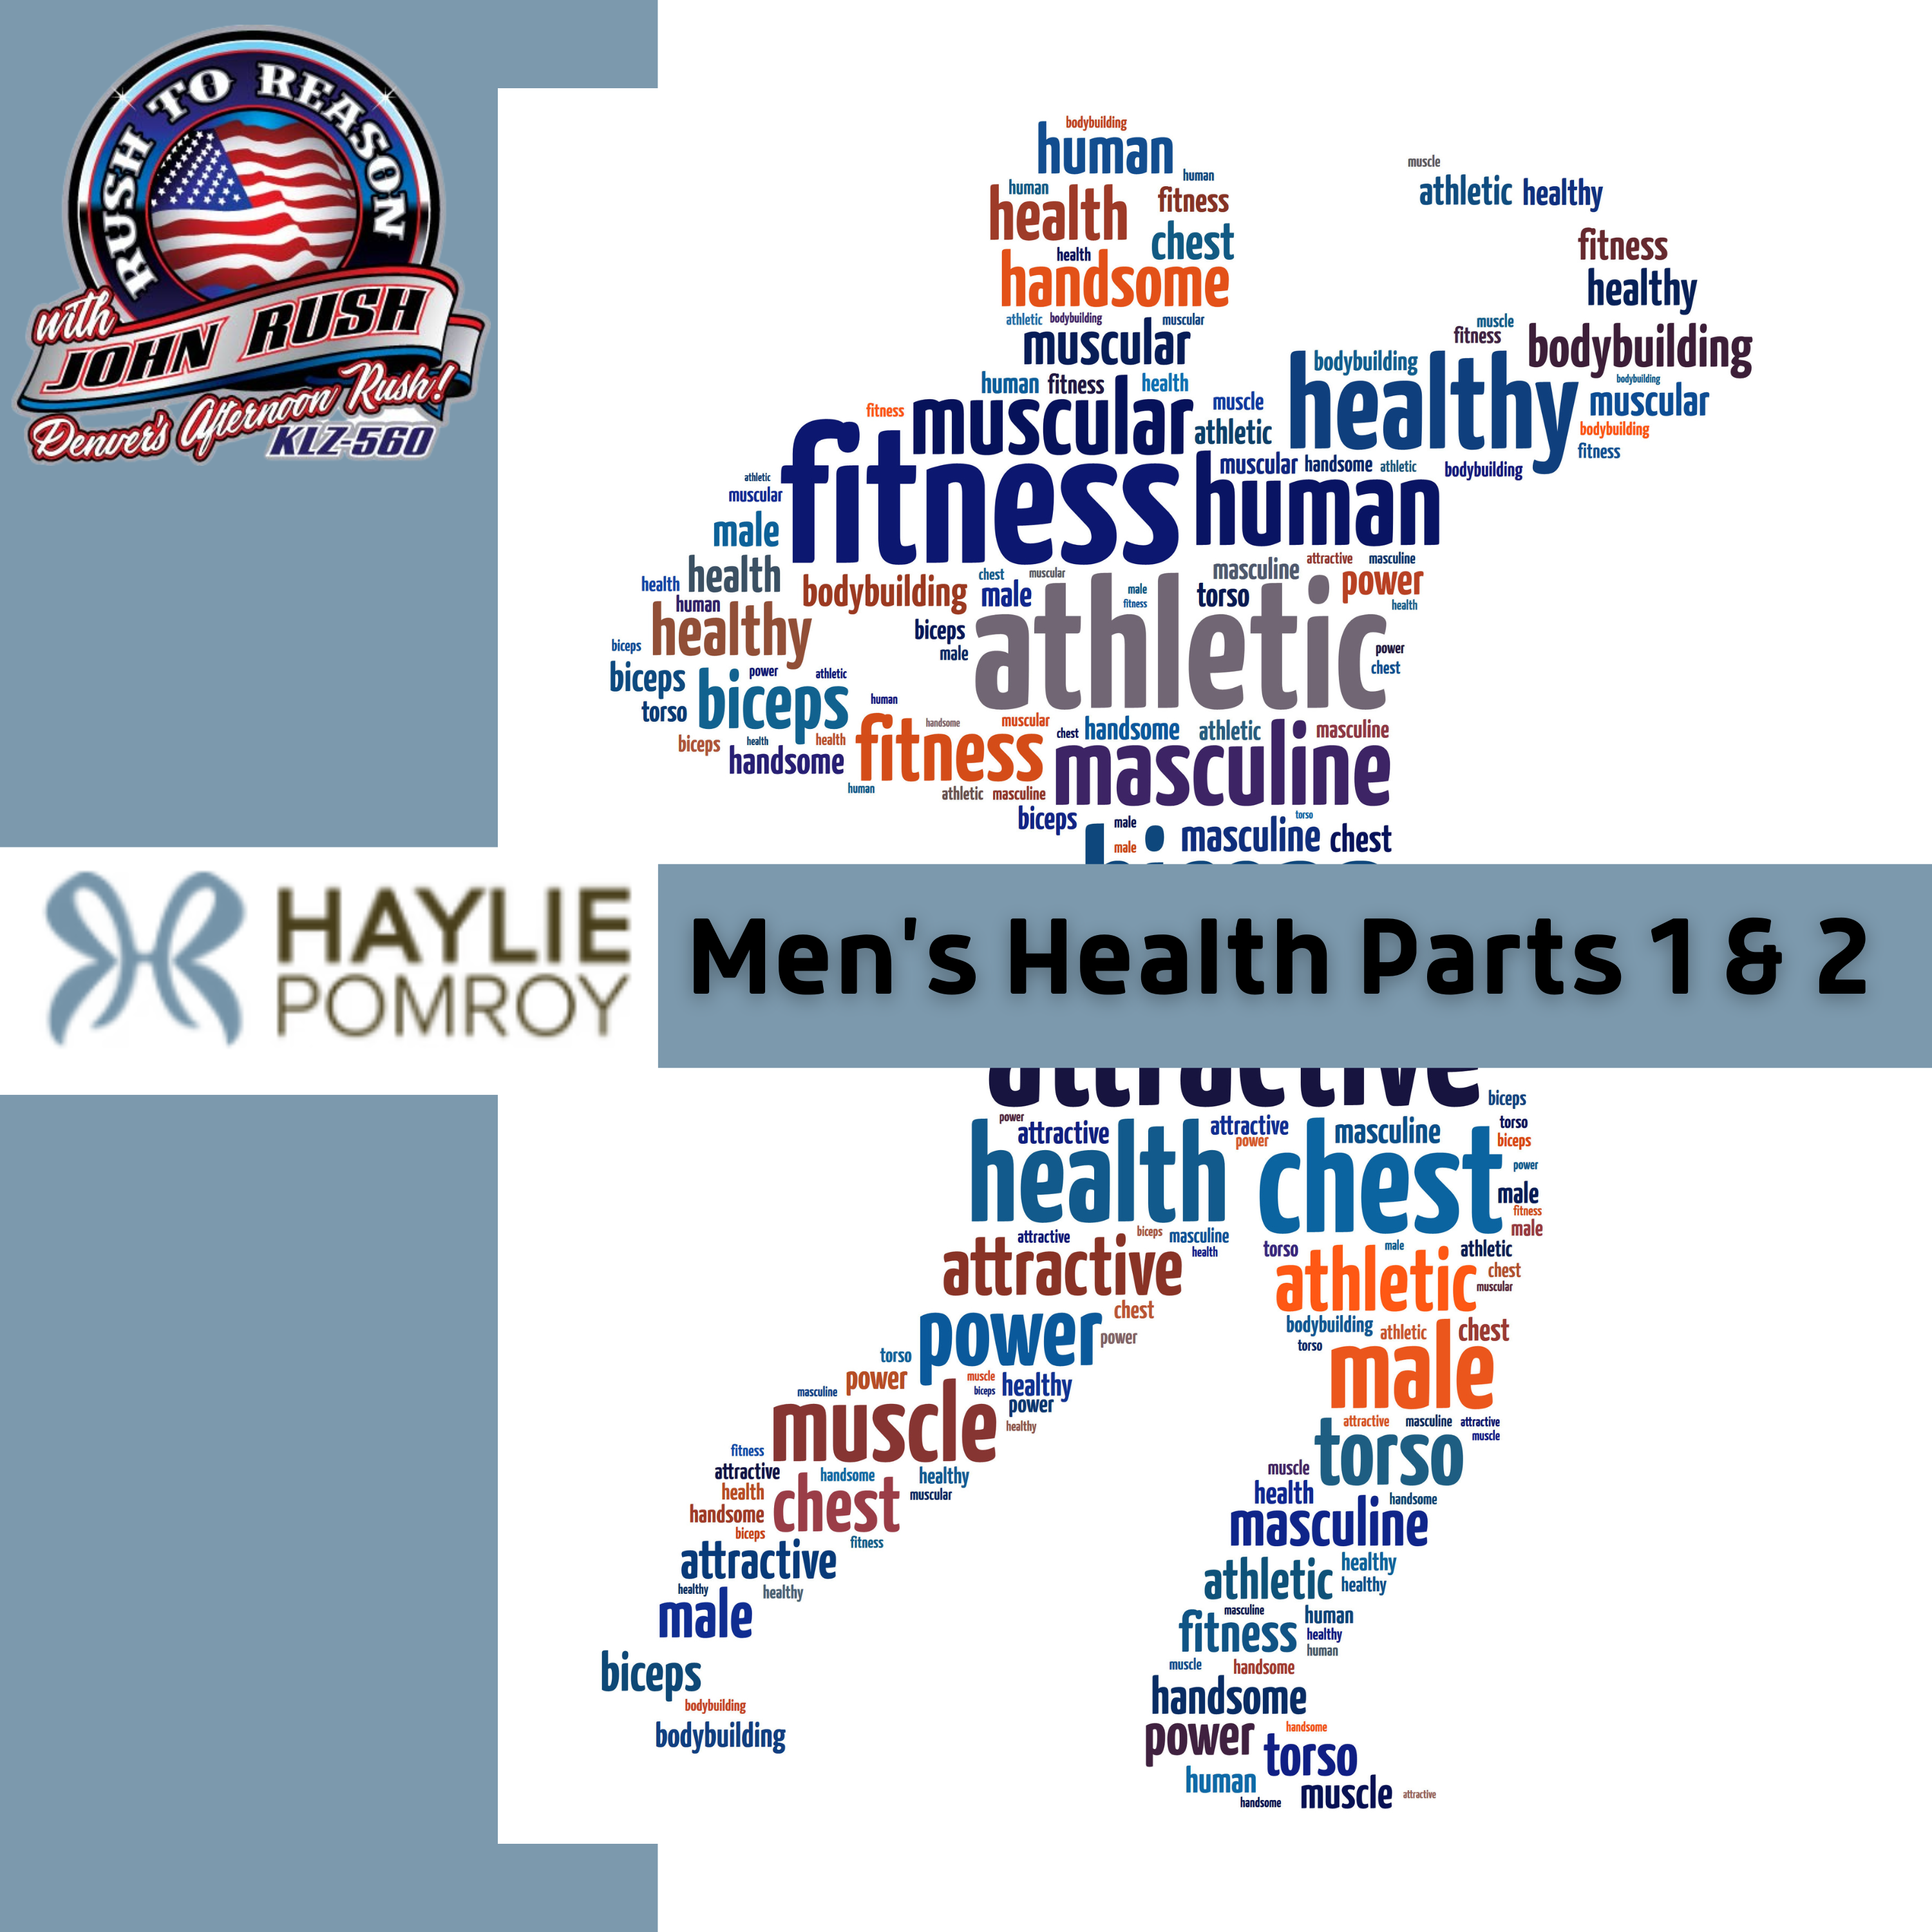 Haylie Pomroy Male Hormones & Men's Health Parts 1 & 2 